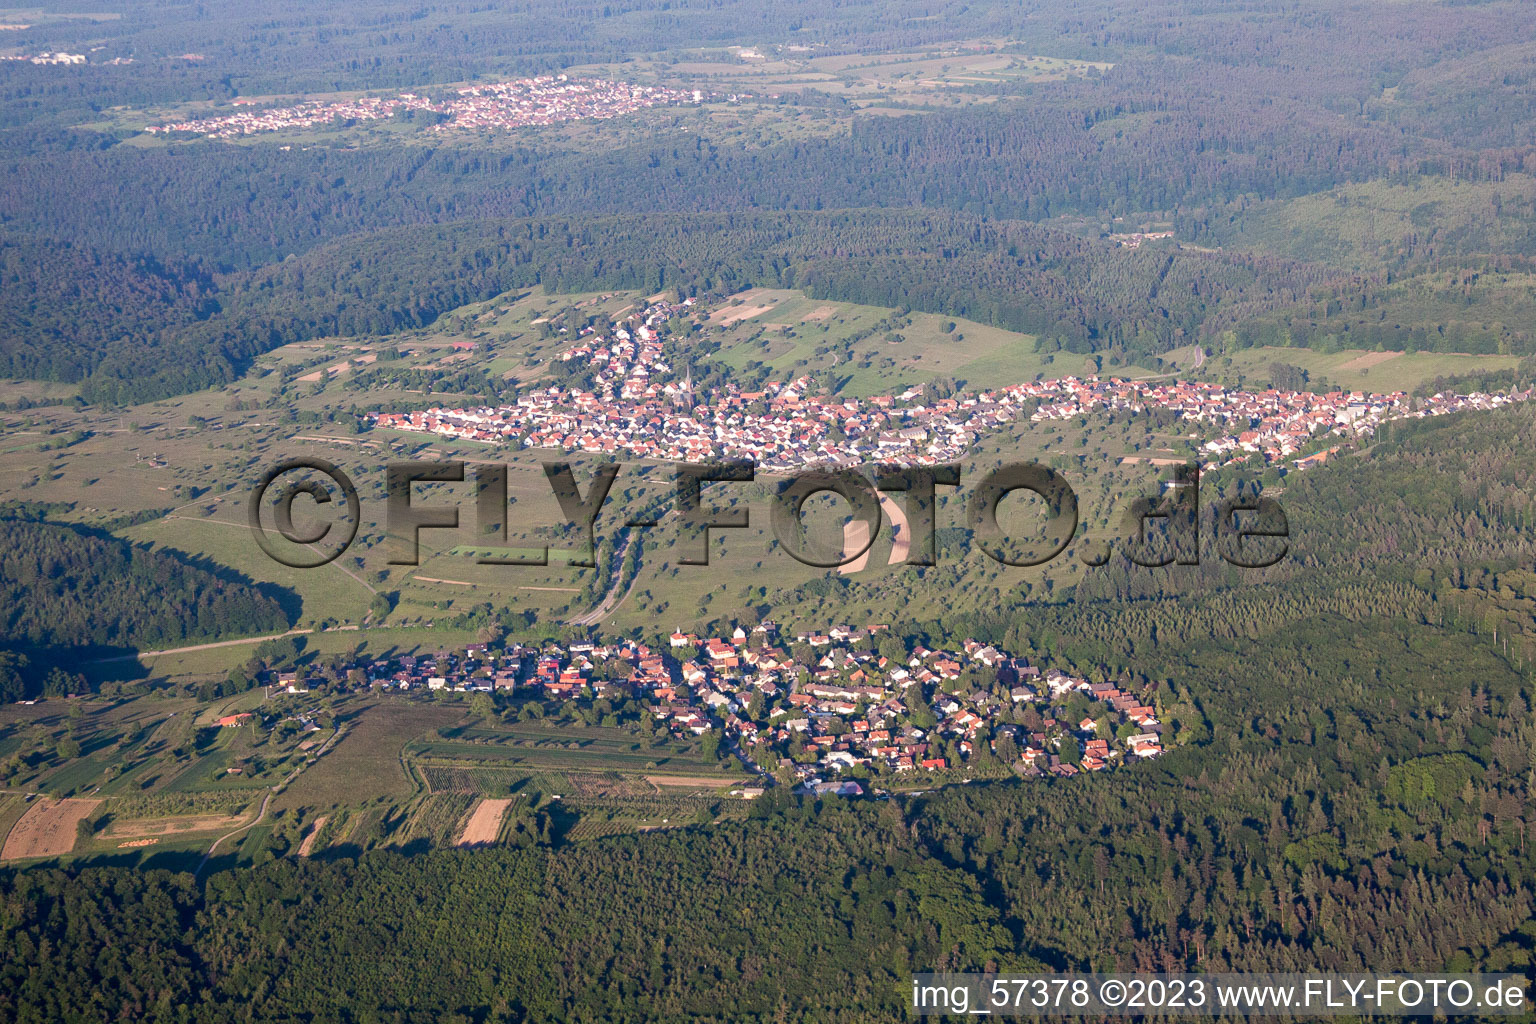 District Schluttenbach in Ettlingen in the state Baden-Wuerttemberg, Germany seen from above